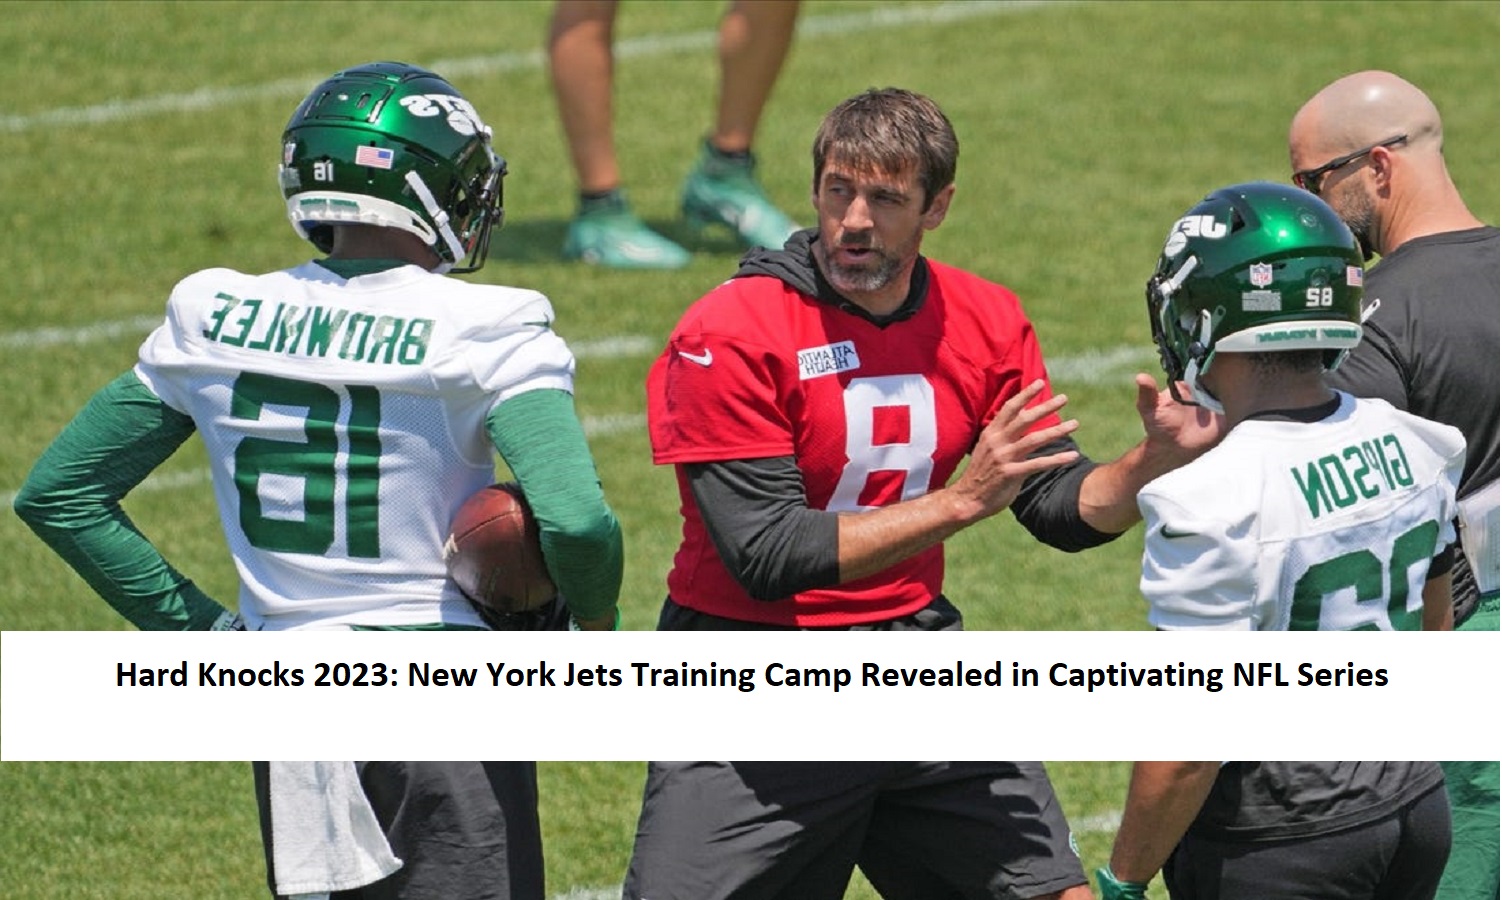 Hard Knocks 2023: New York Jets Training Camp Revealed in Captivating NFL Series